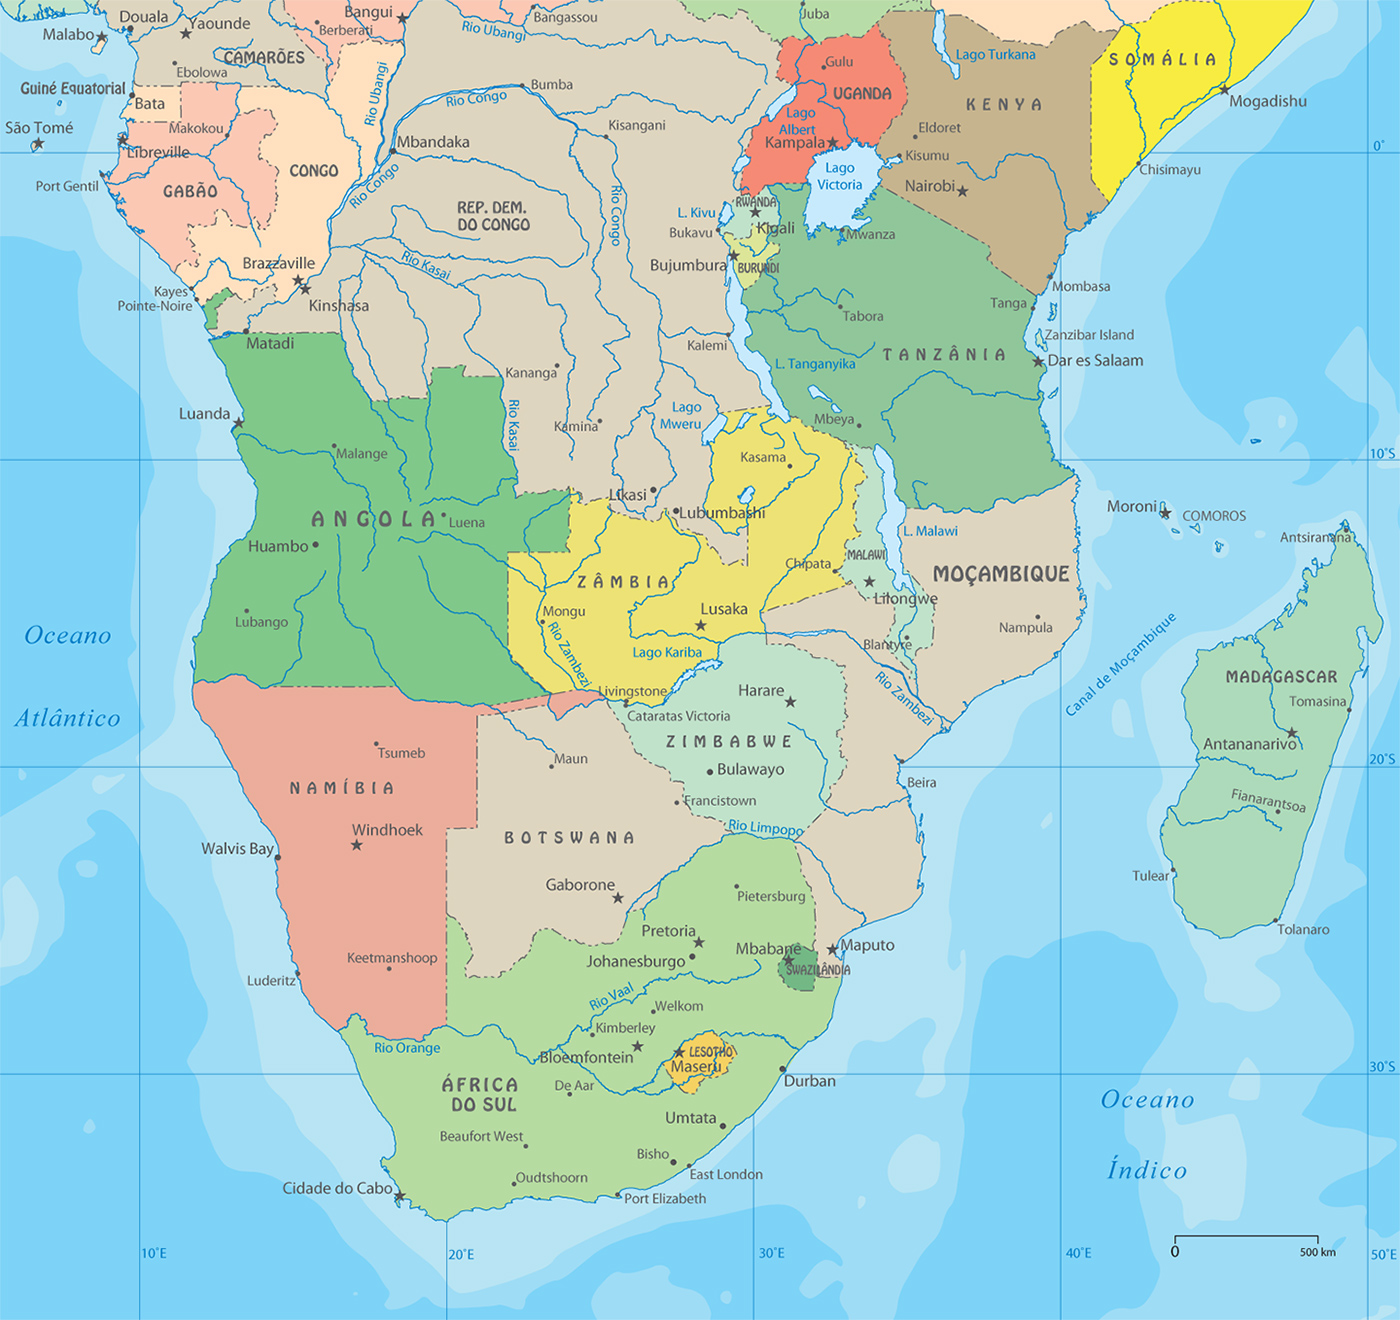 Mapa sul Africa